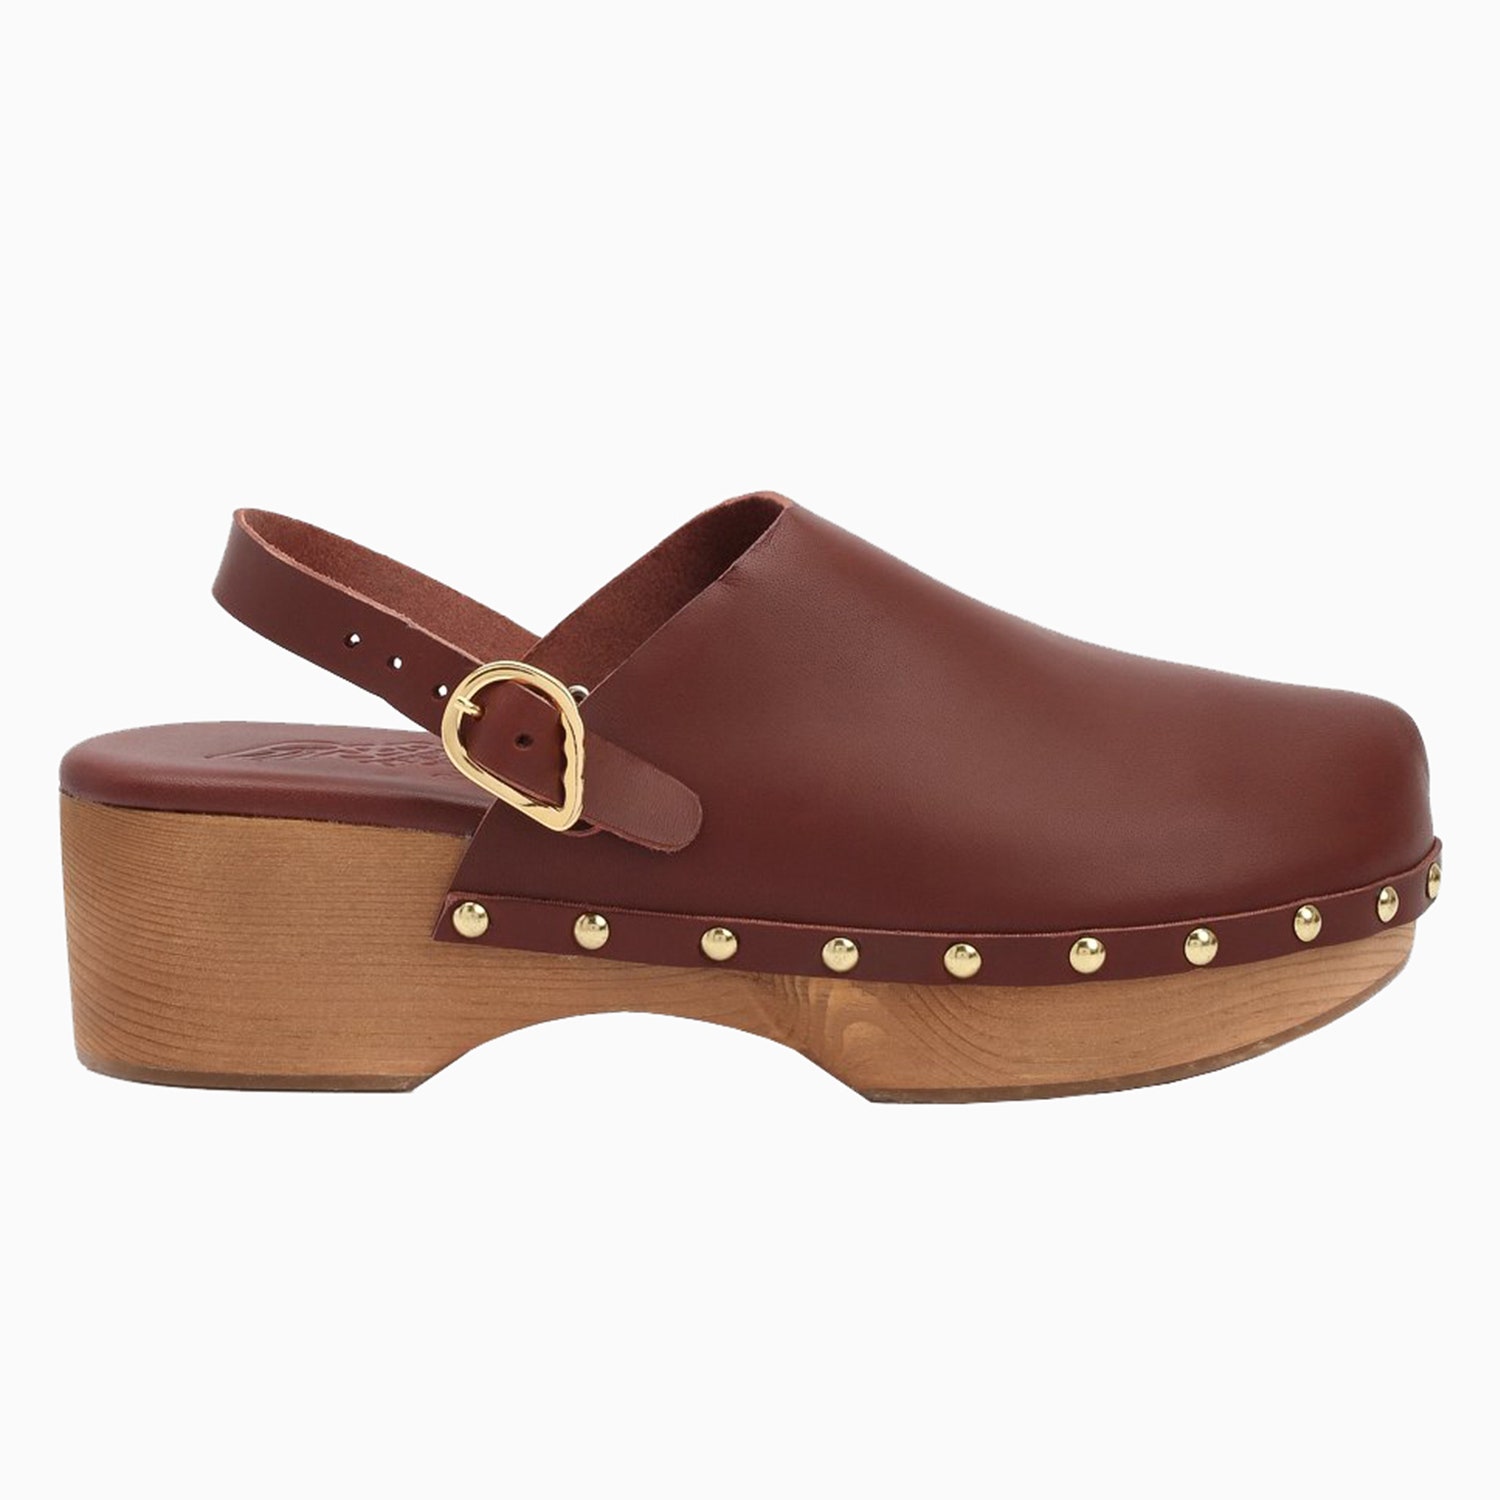 Ancient Greek Sandals 29950 рублей tsum.ru